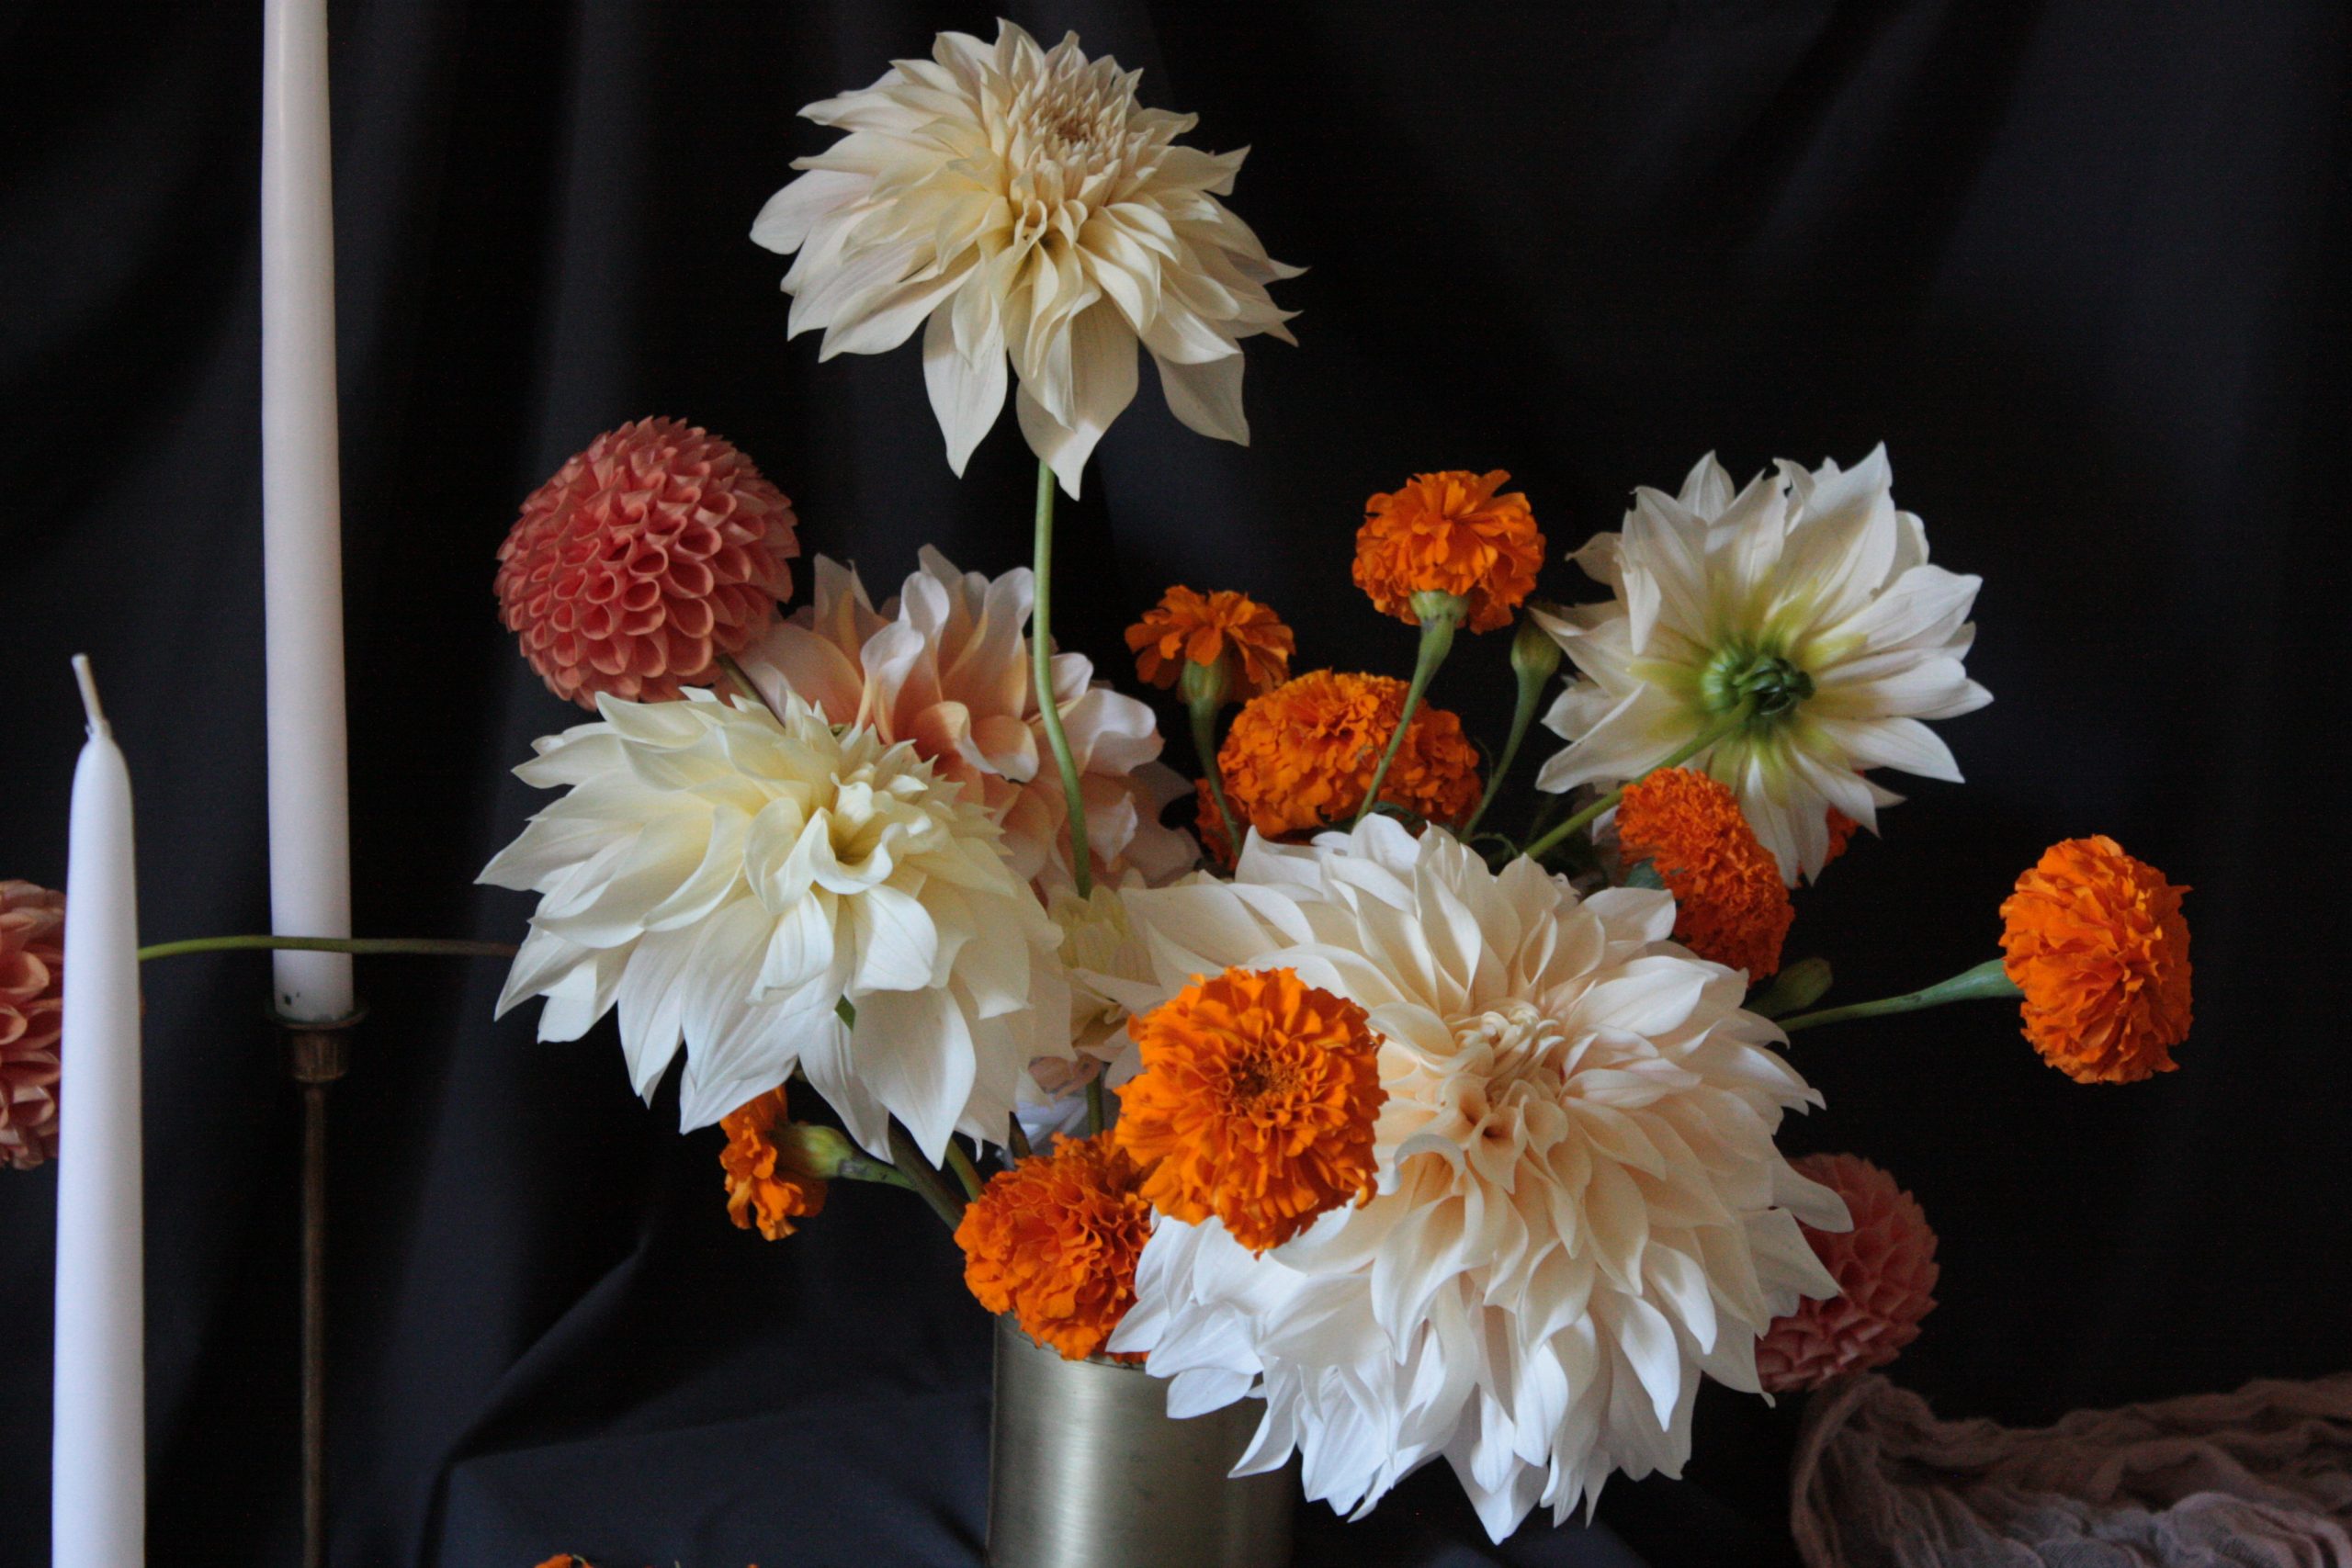 a halloweeny centerpiece with orange marigolds and neutral cafe au lait dahlias